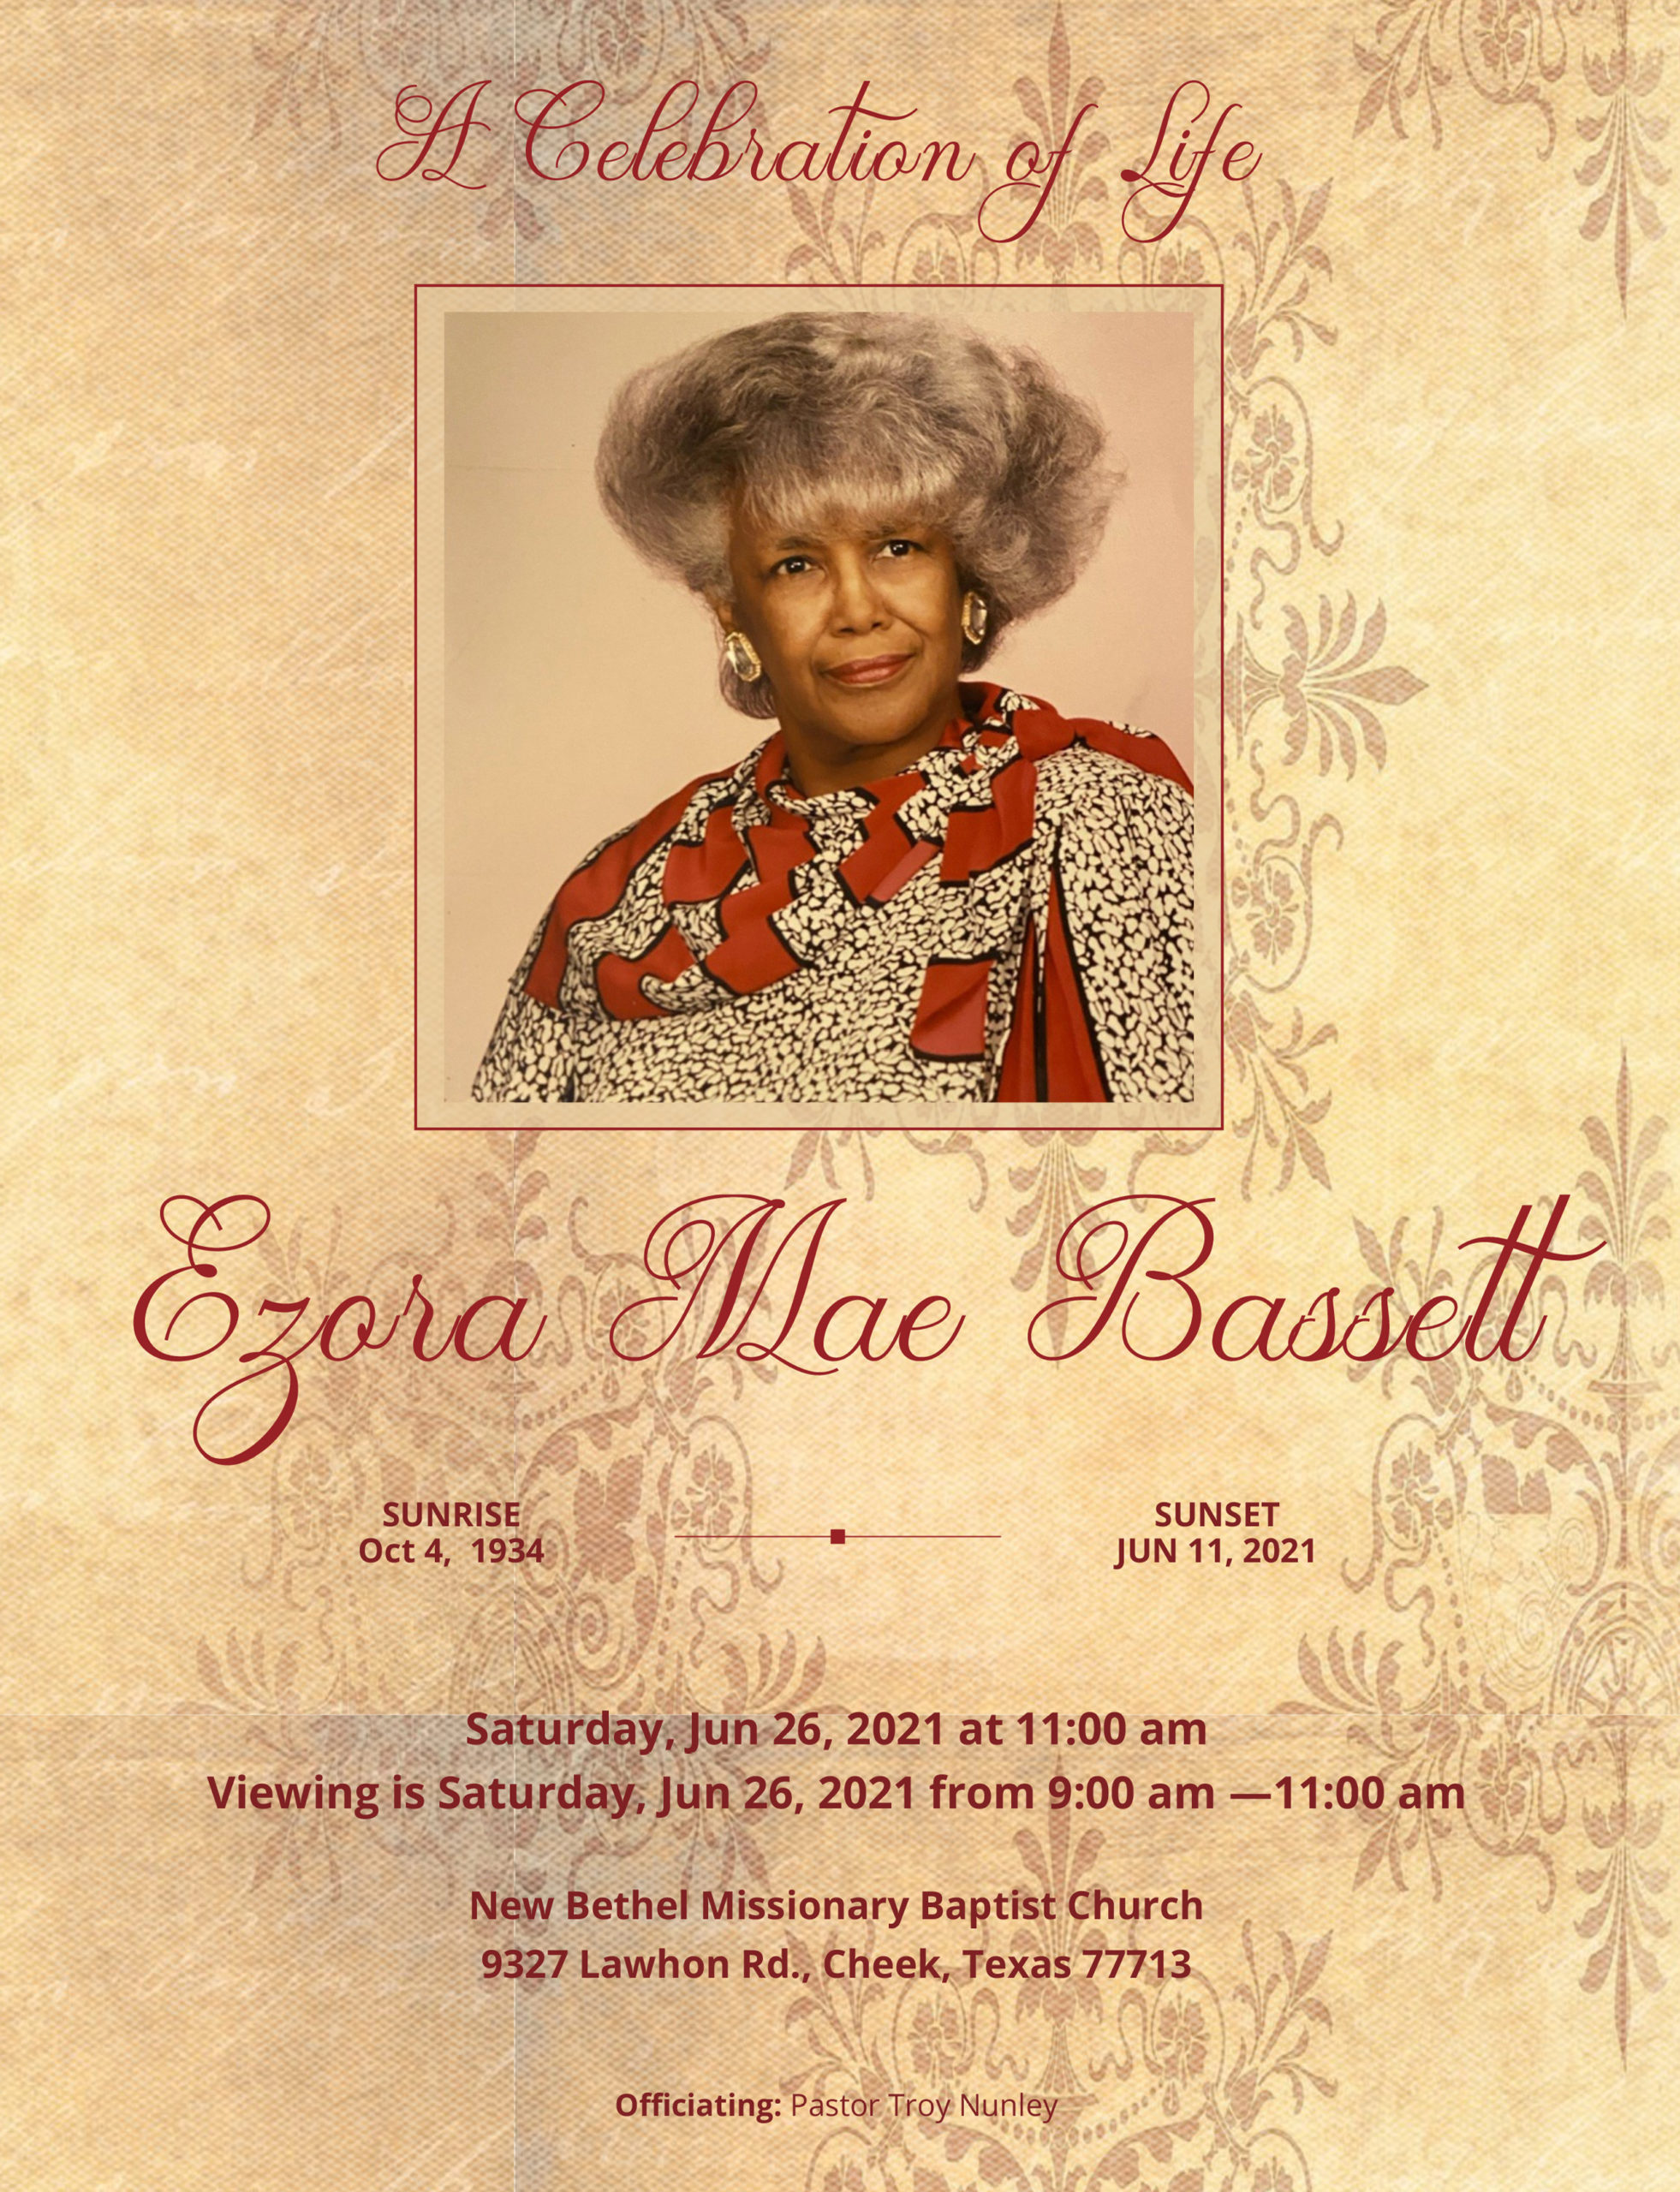 Ezora Mae Basset 1934-2021